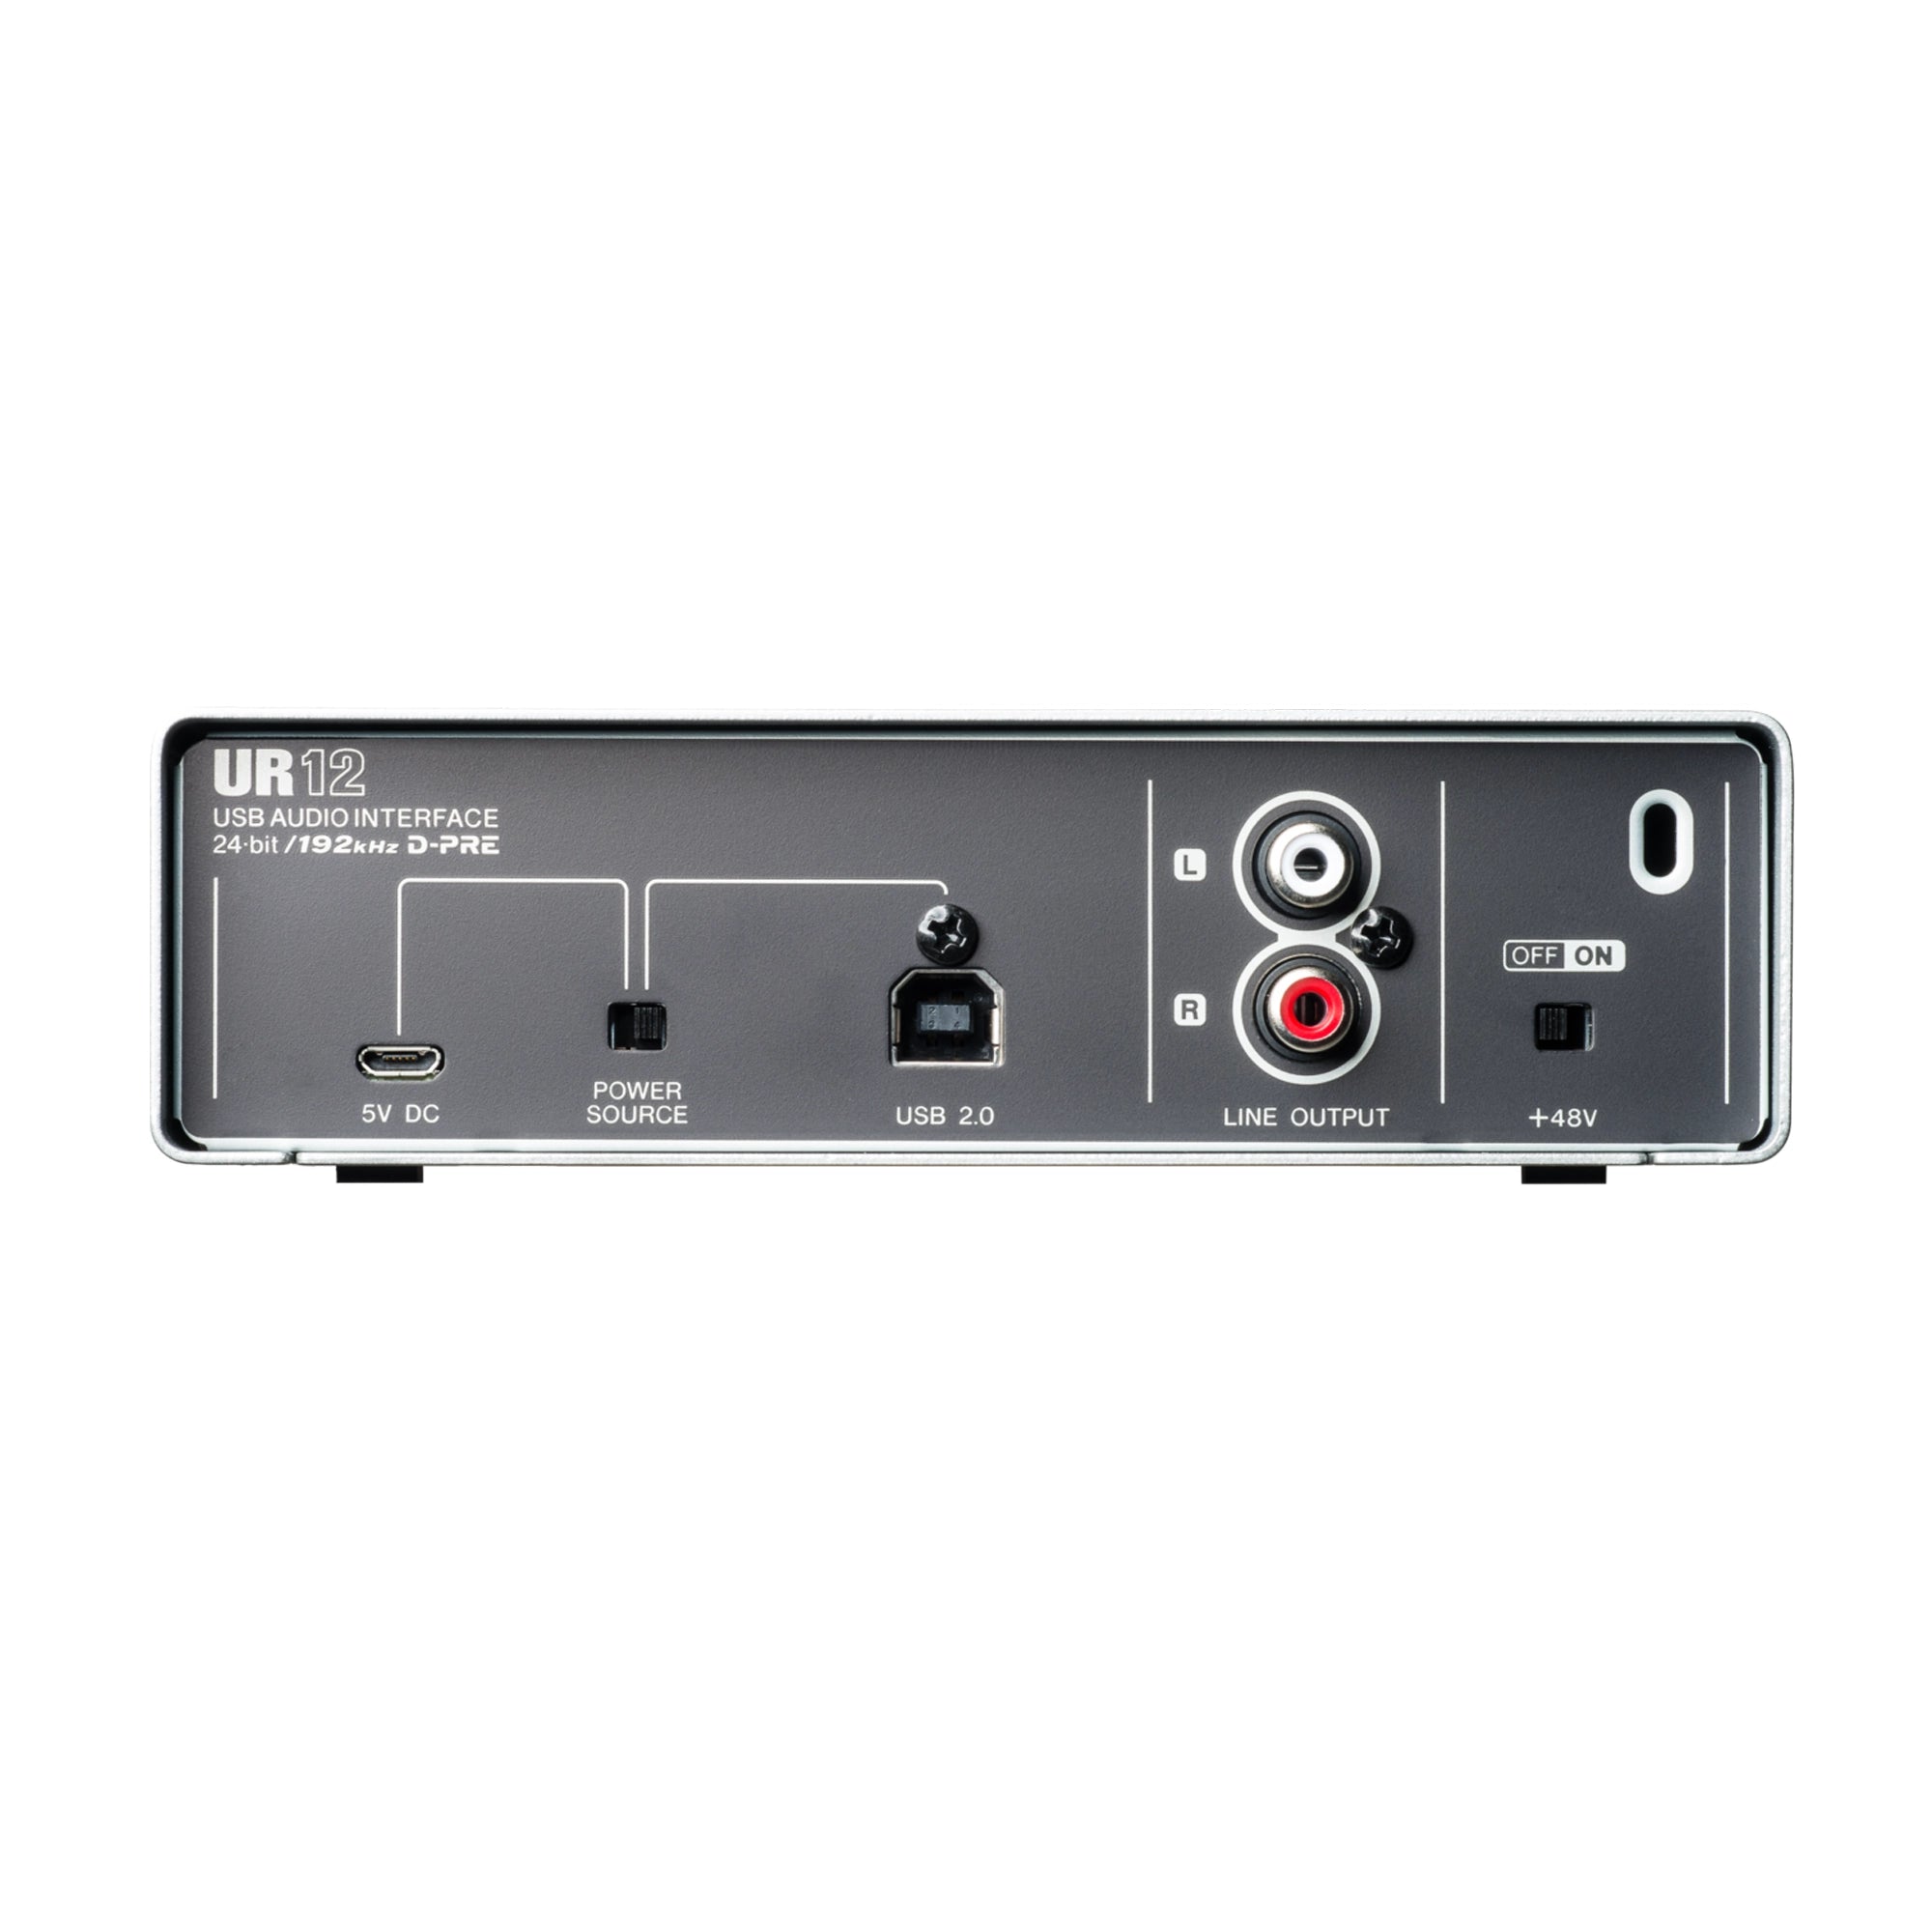 Steinberg UR12 - USB Audio Interface